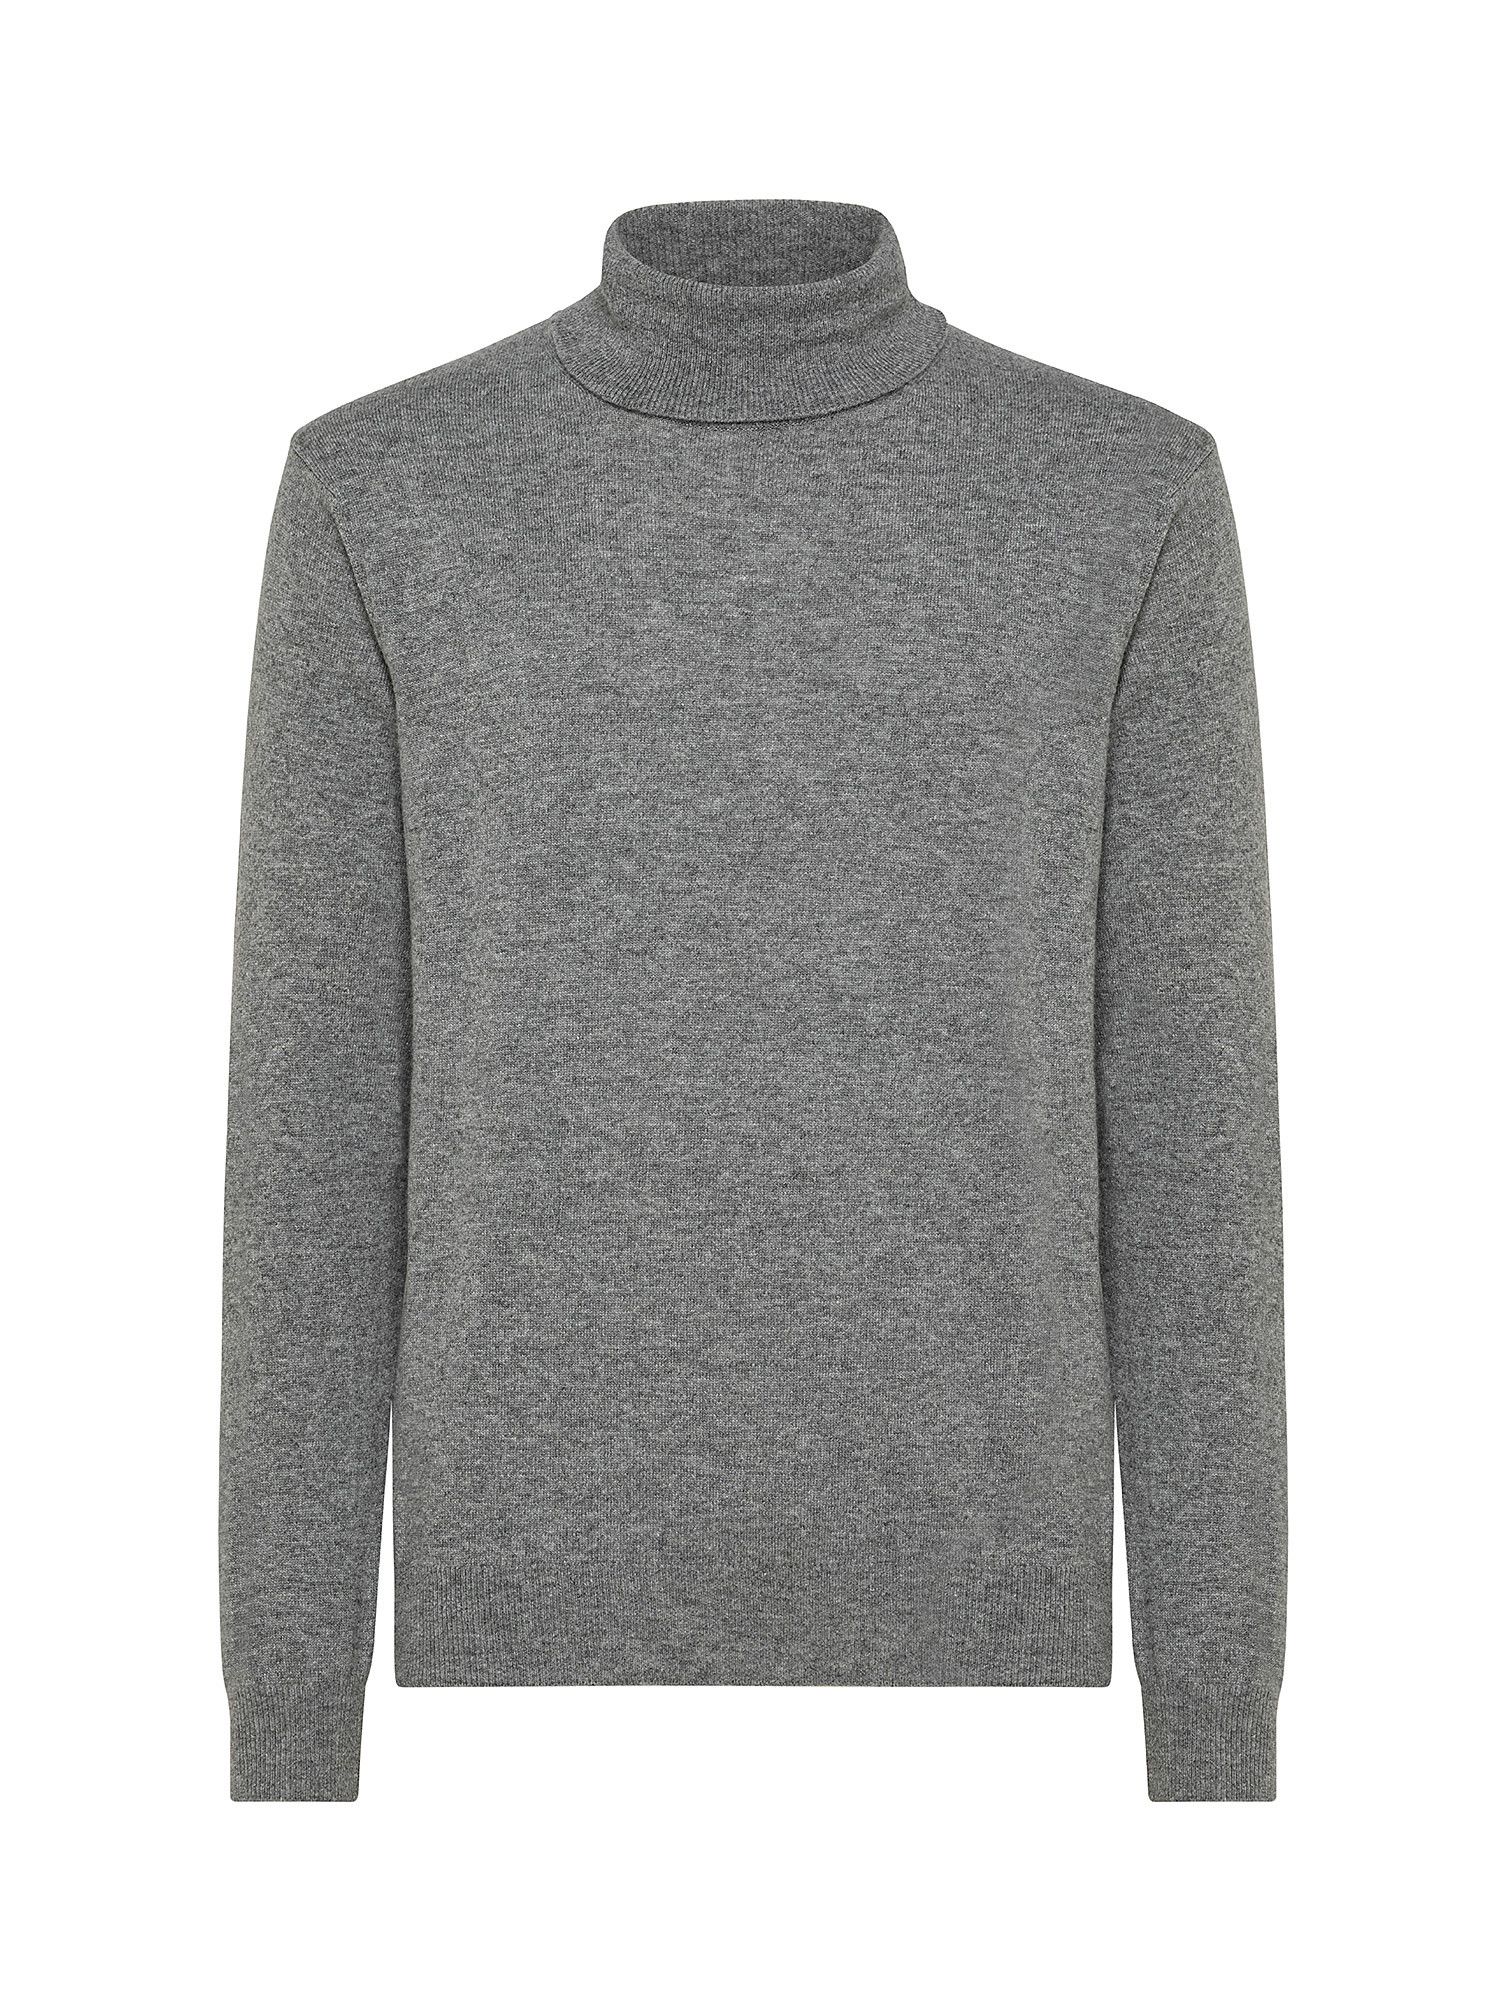 Cashmere Blend turtleneck with noble fibers, Grey, large image number 0